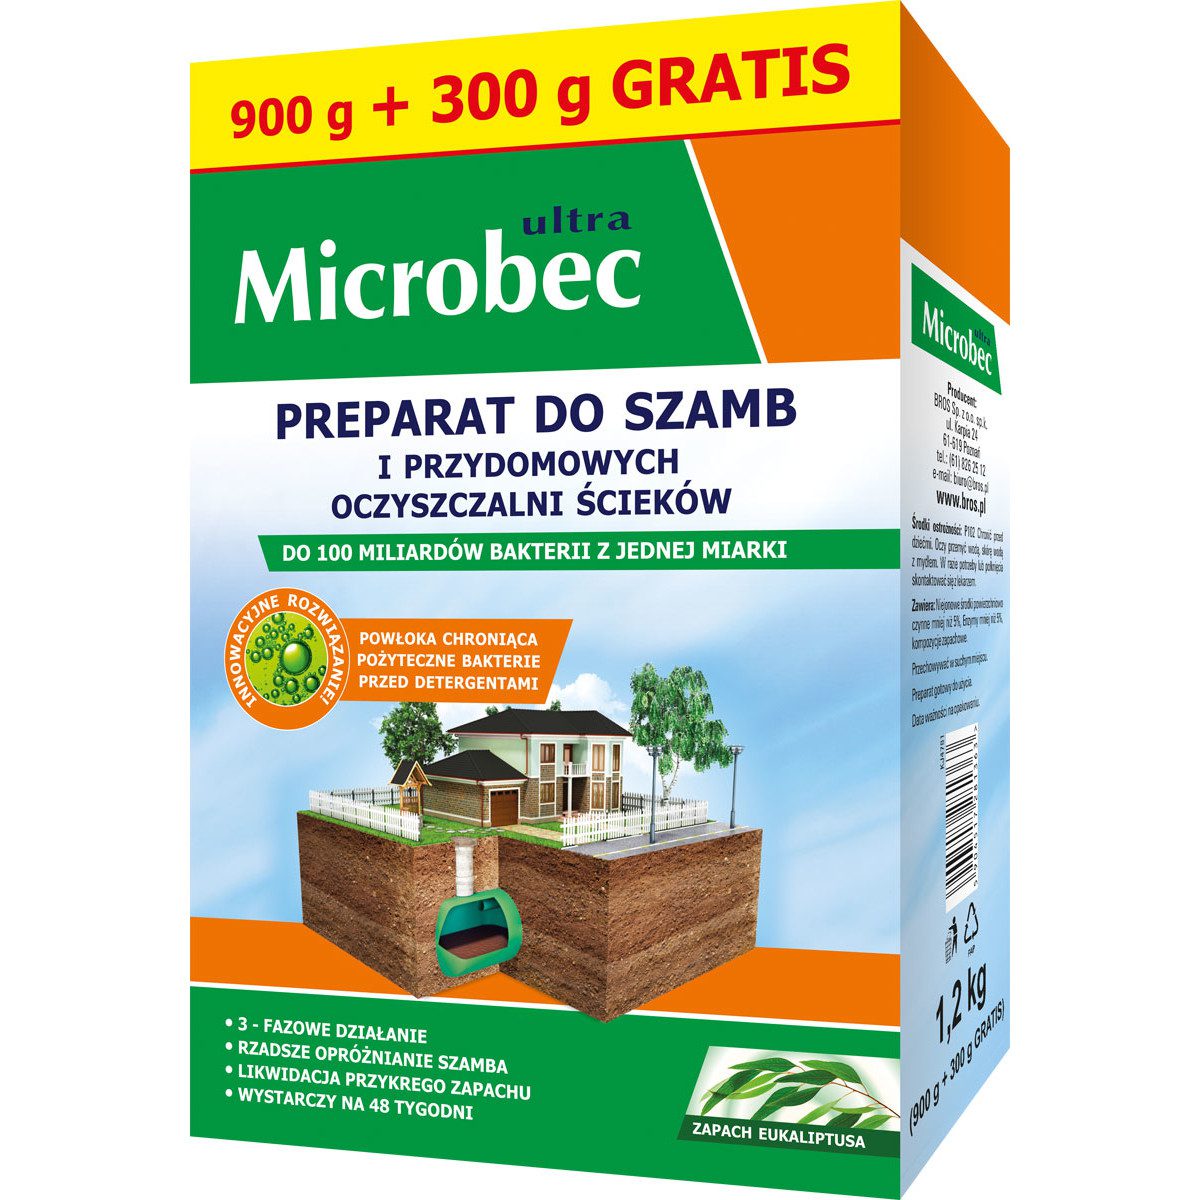 Microbec Ultra zapach eukaliptusa – preparat do szamb 900+300g